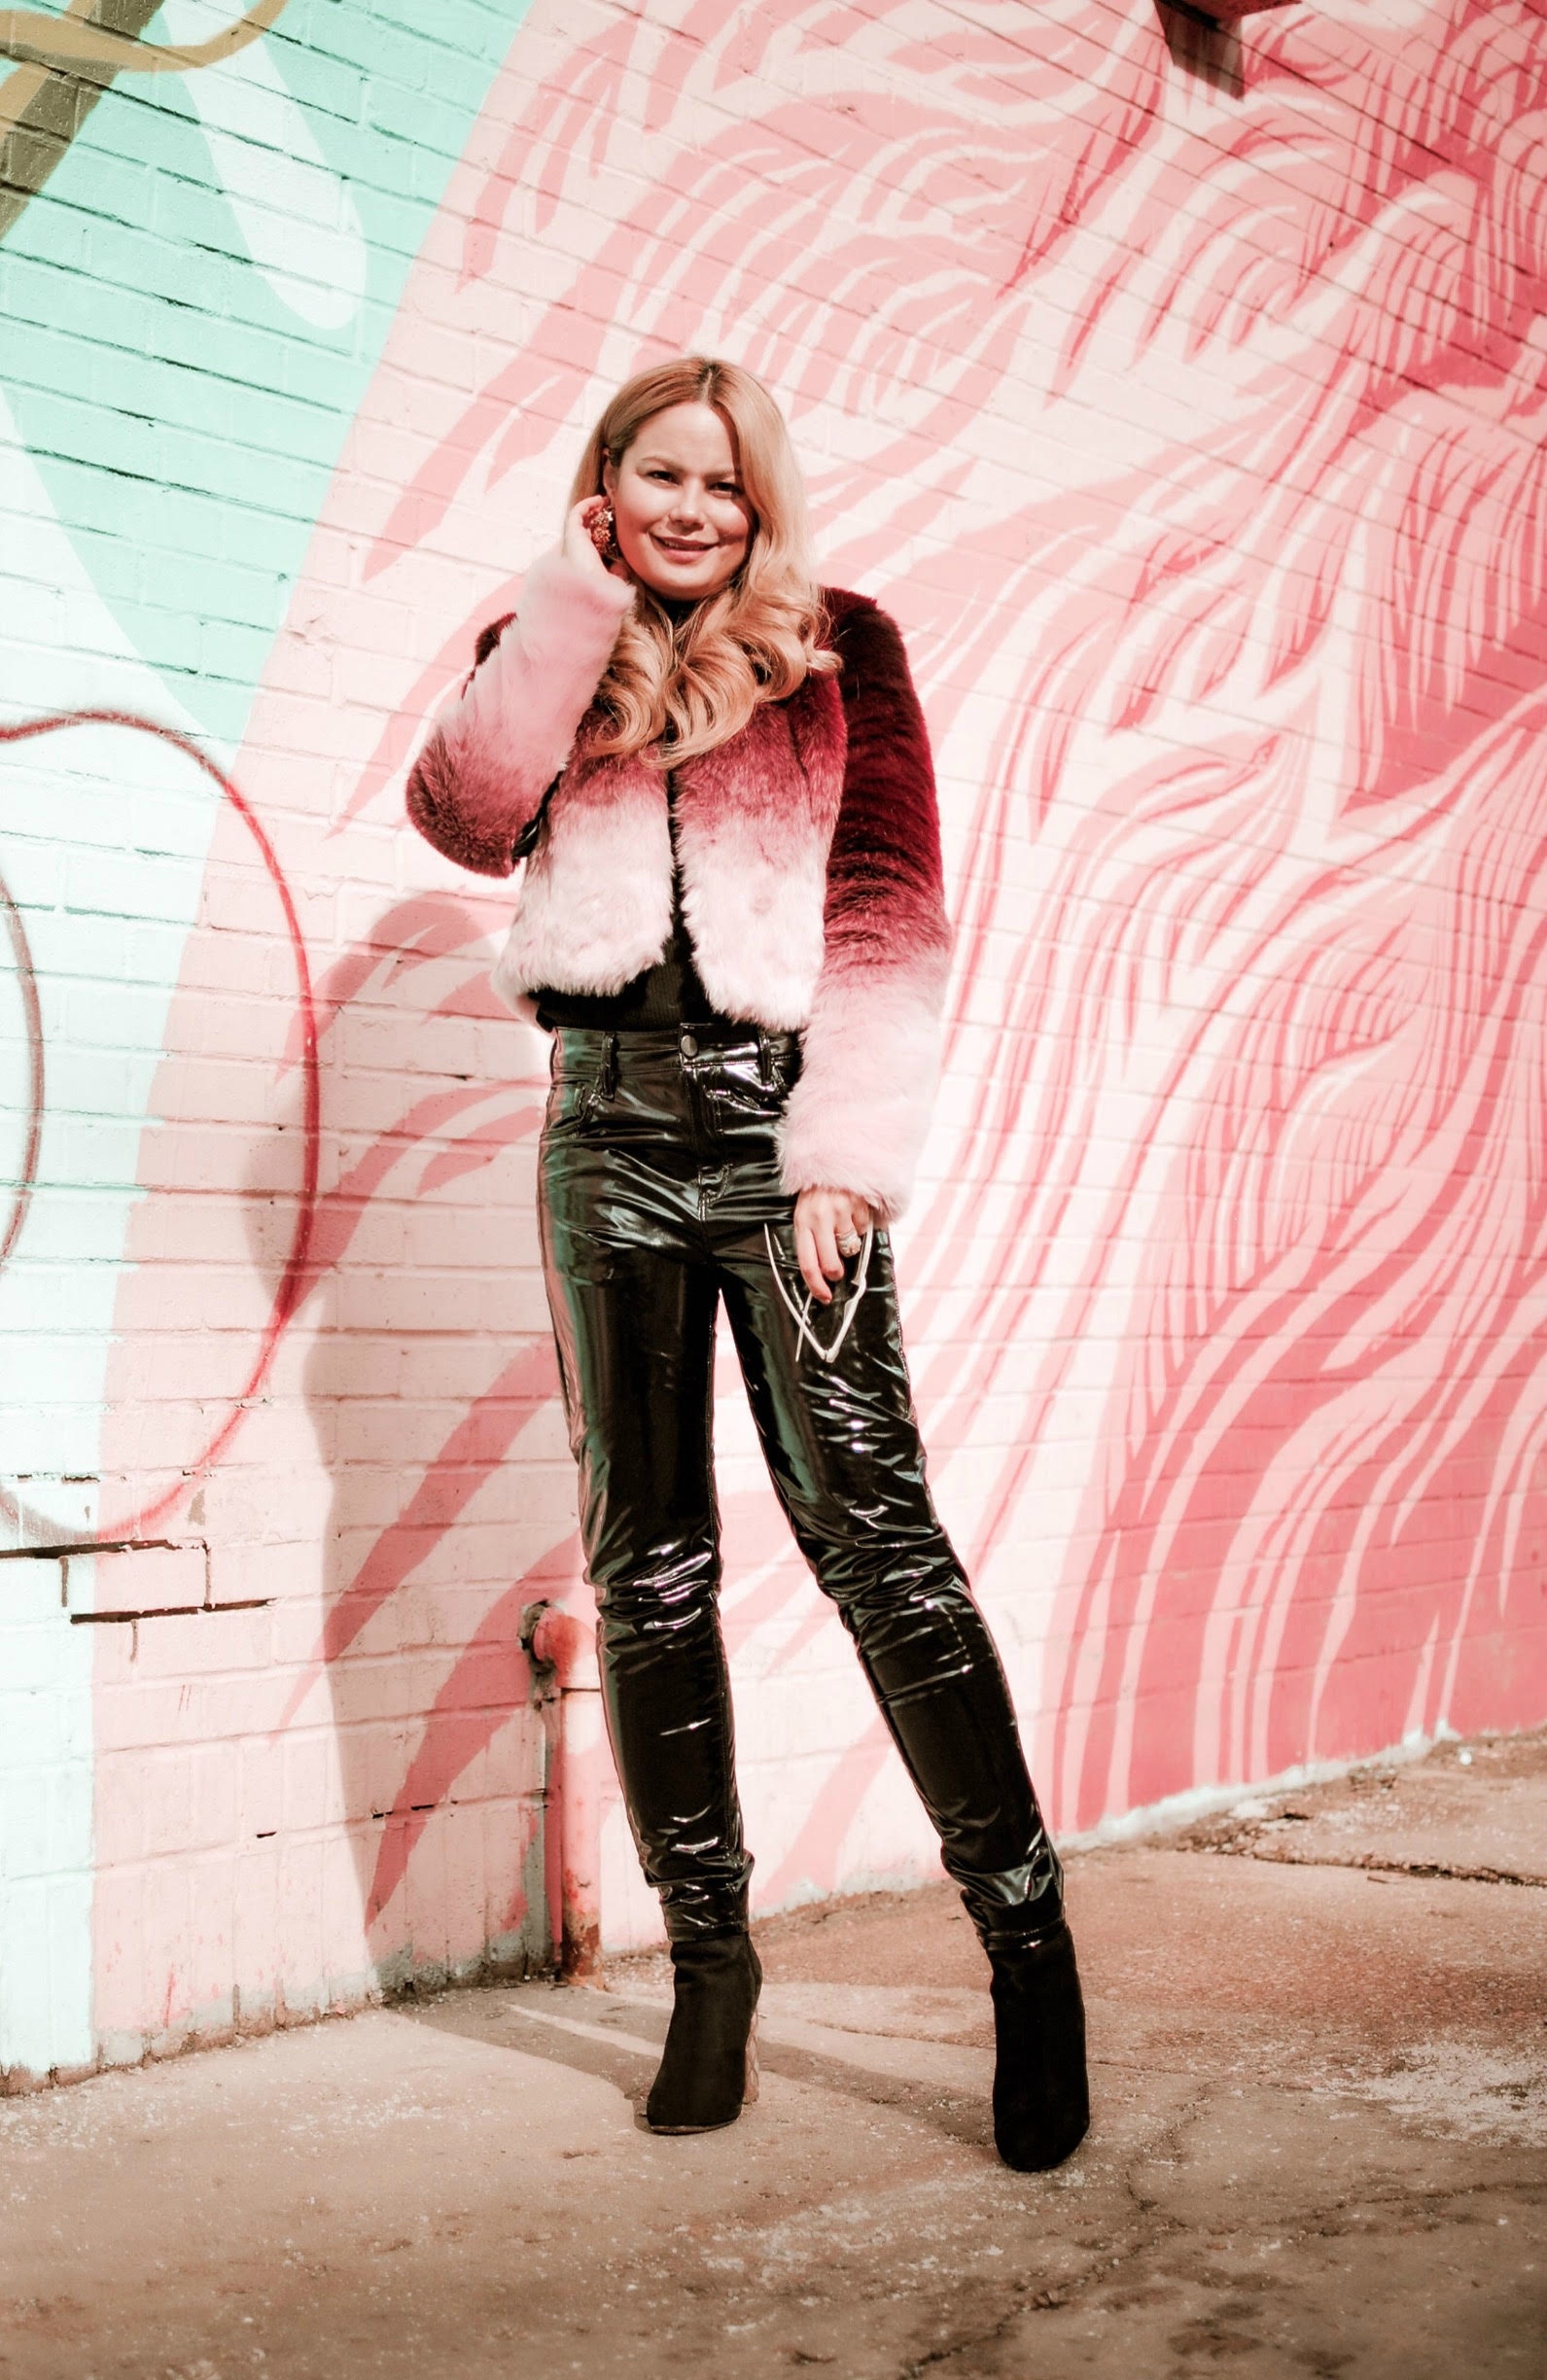 Vanessa-Lambert-blogger-What-Would-V-Wear-wears-vinyl-pants-faux-fur-jacket-flamingo-wall-chicago